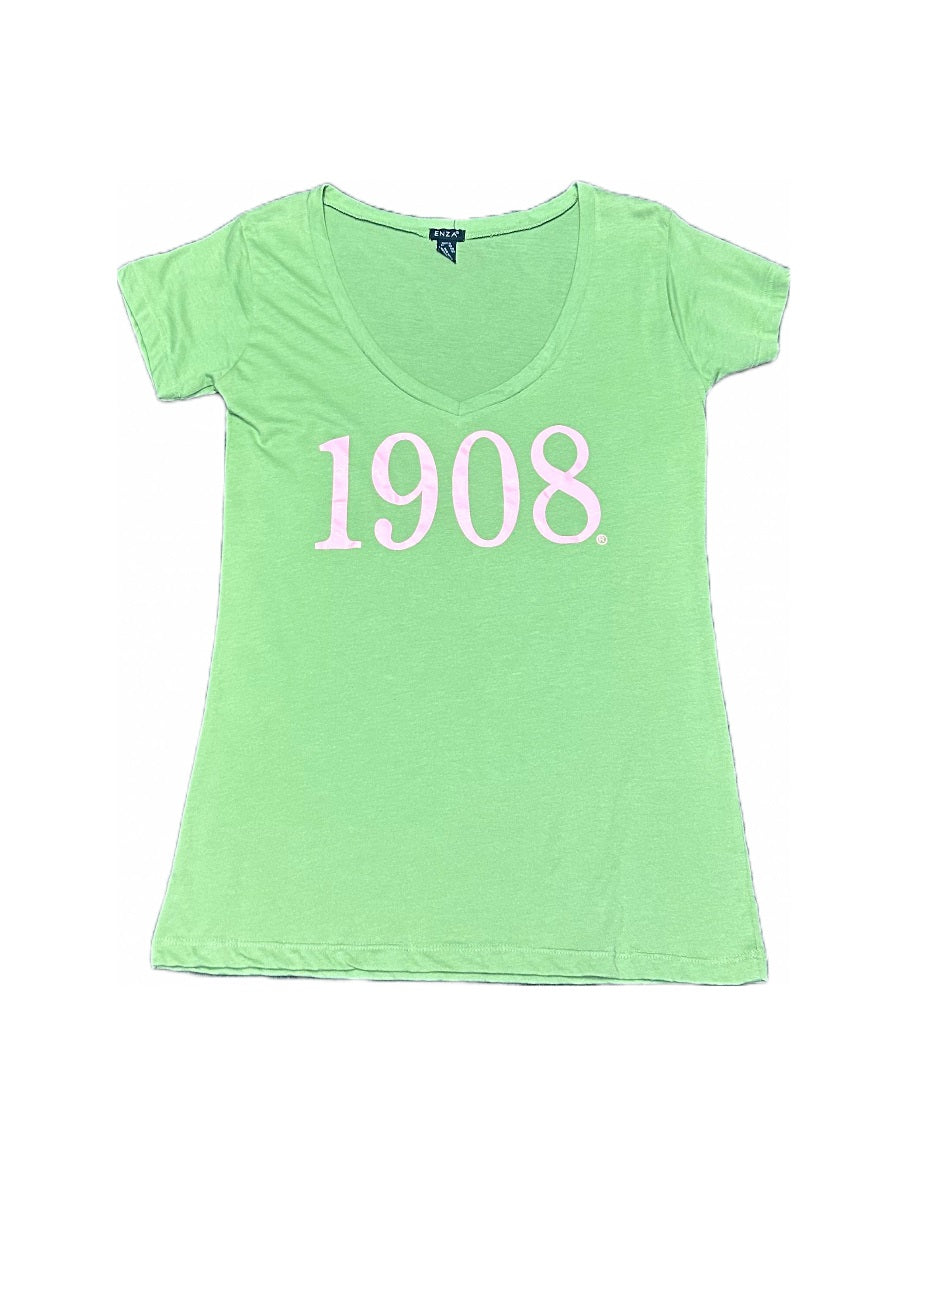 Alpha Kappa Alpha T-Shirt - 1908, Lime Green